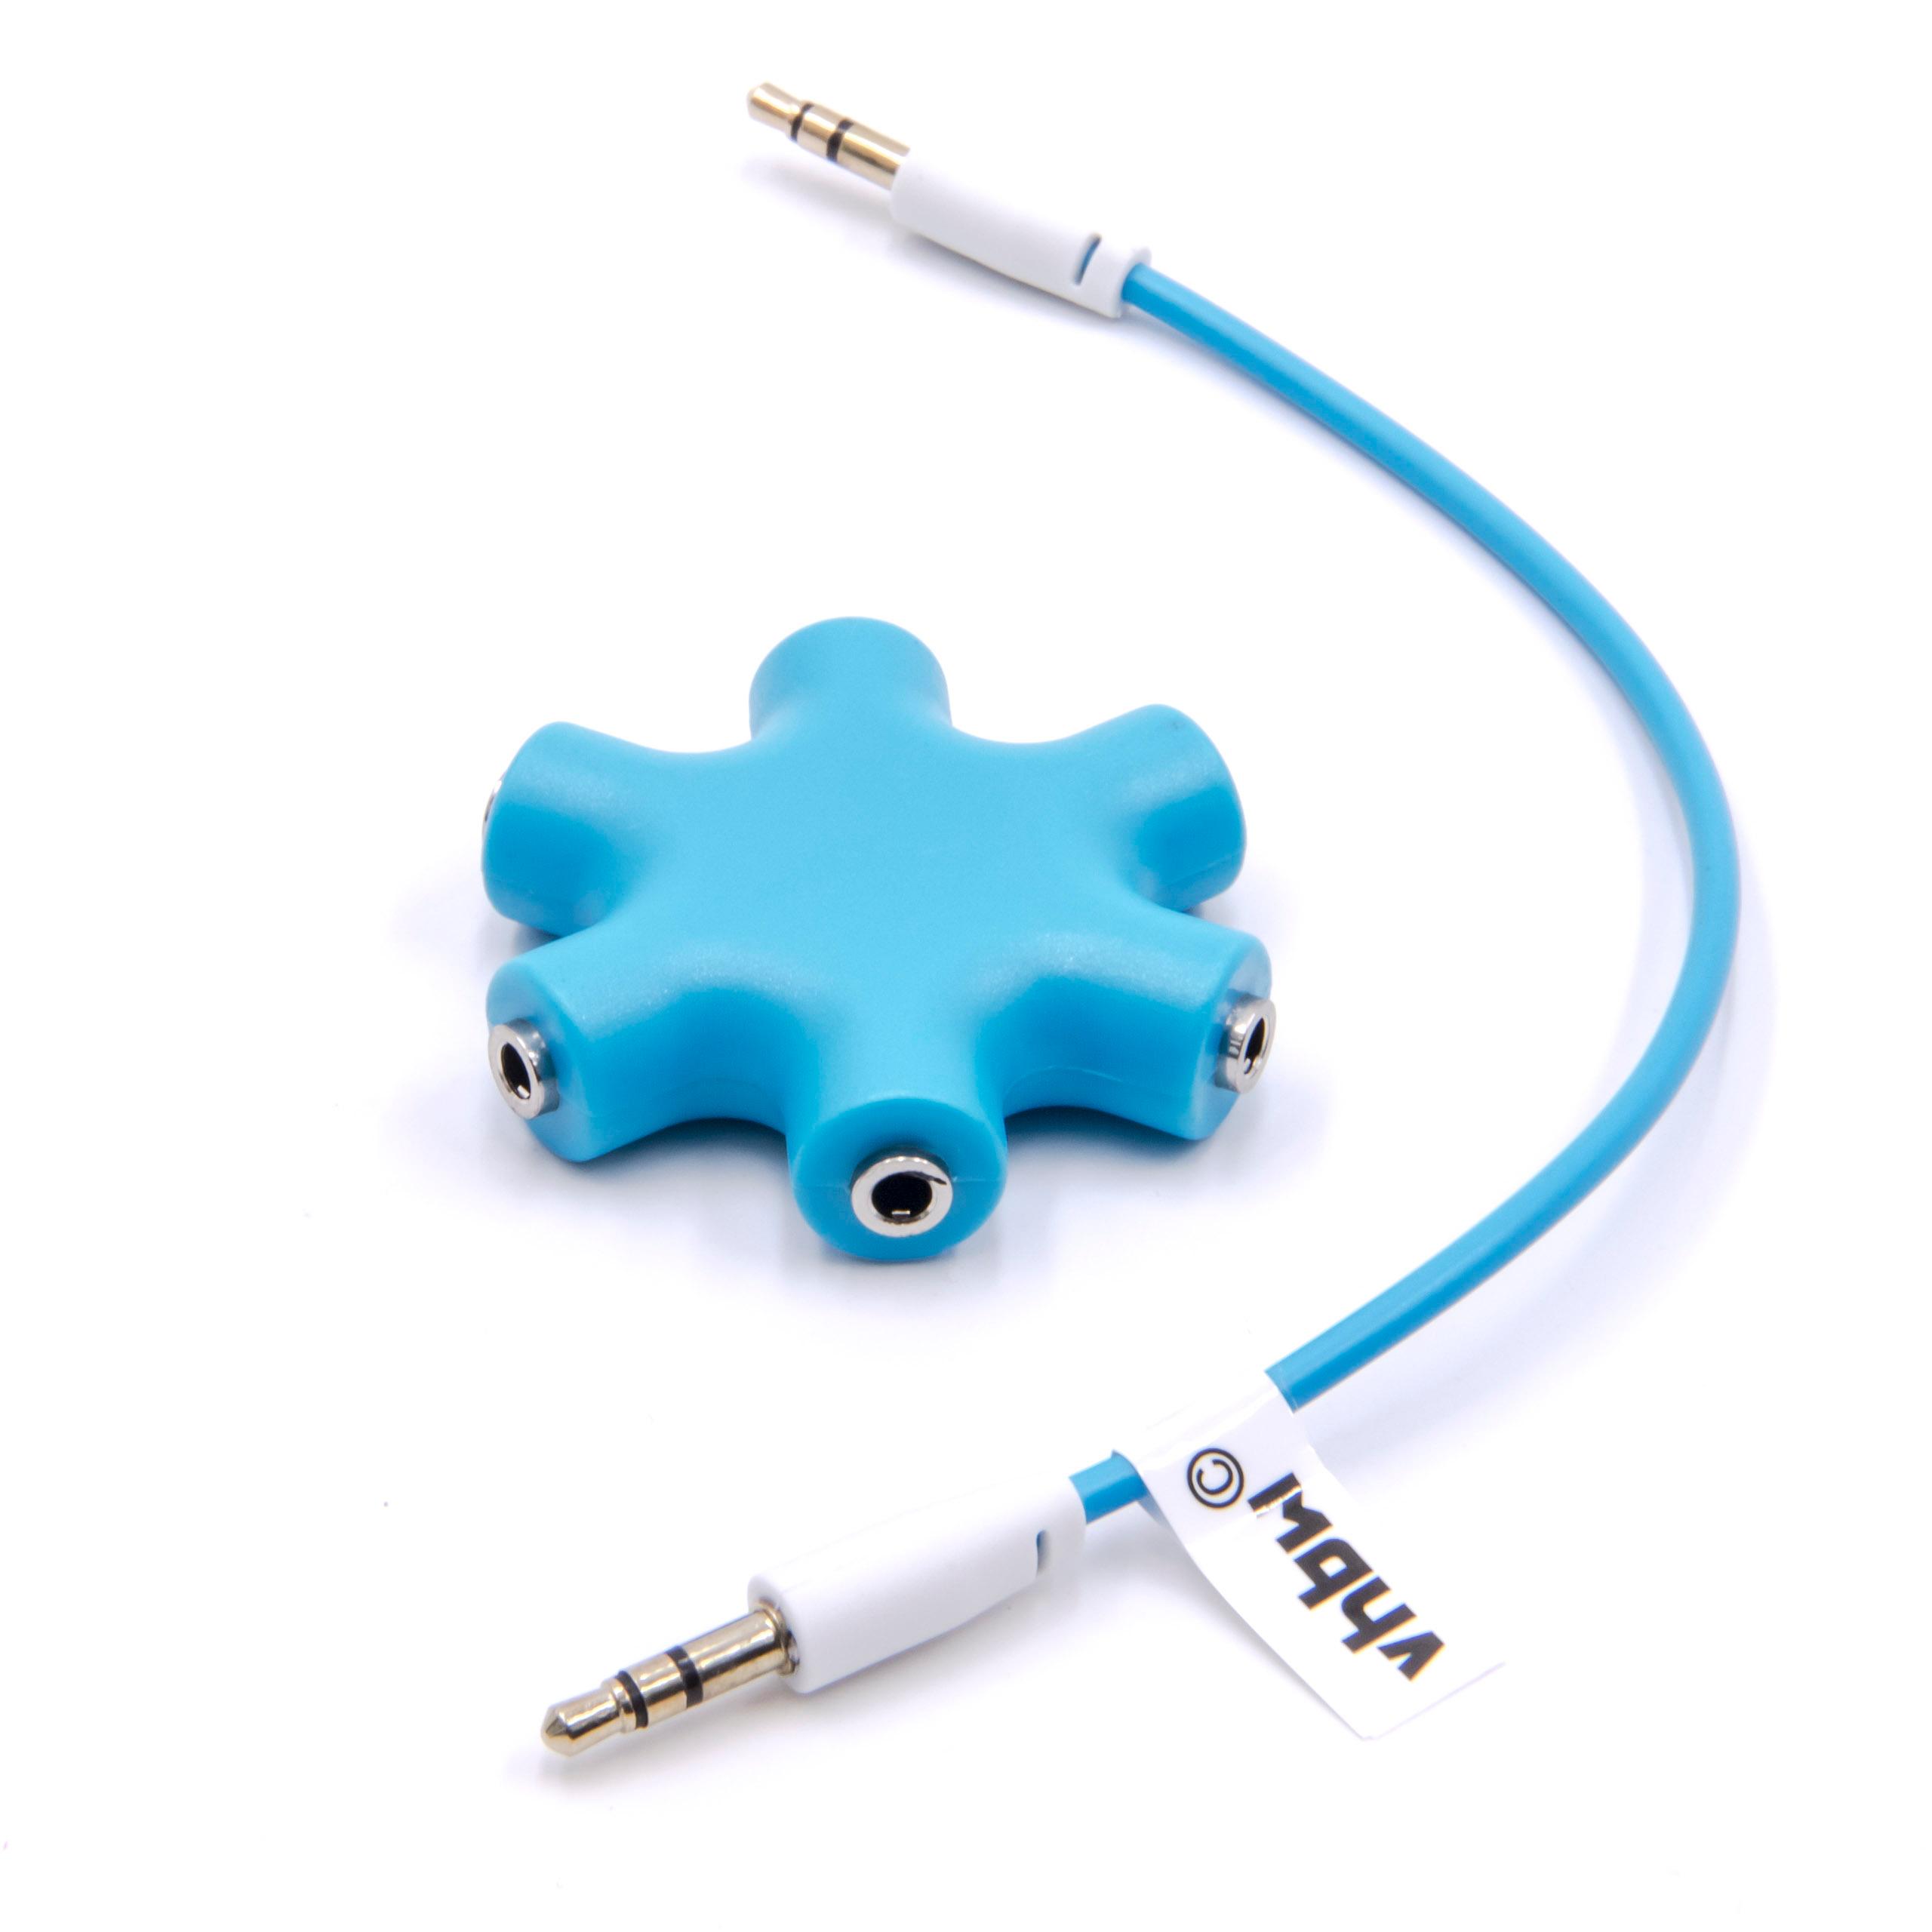 vhbw Splitter audio, divisor, duplicador jack 5 vías AUX azul para auriculares, altavoces, tablets